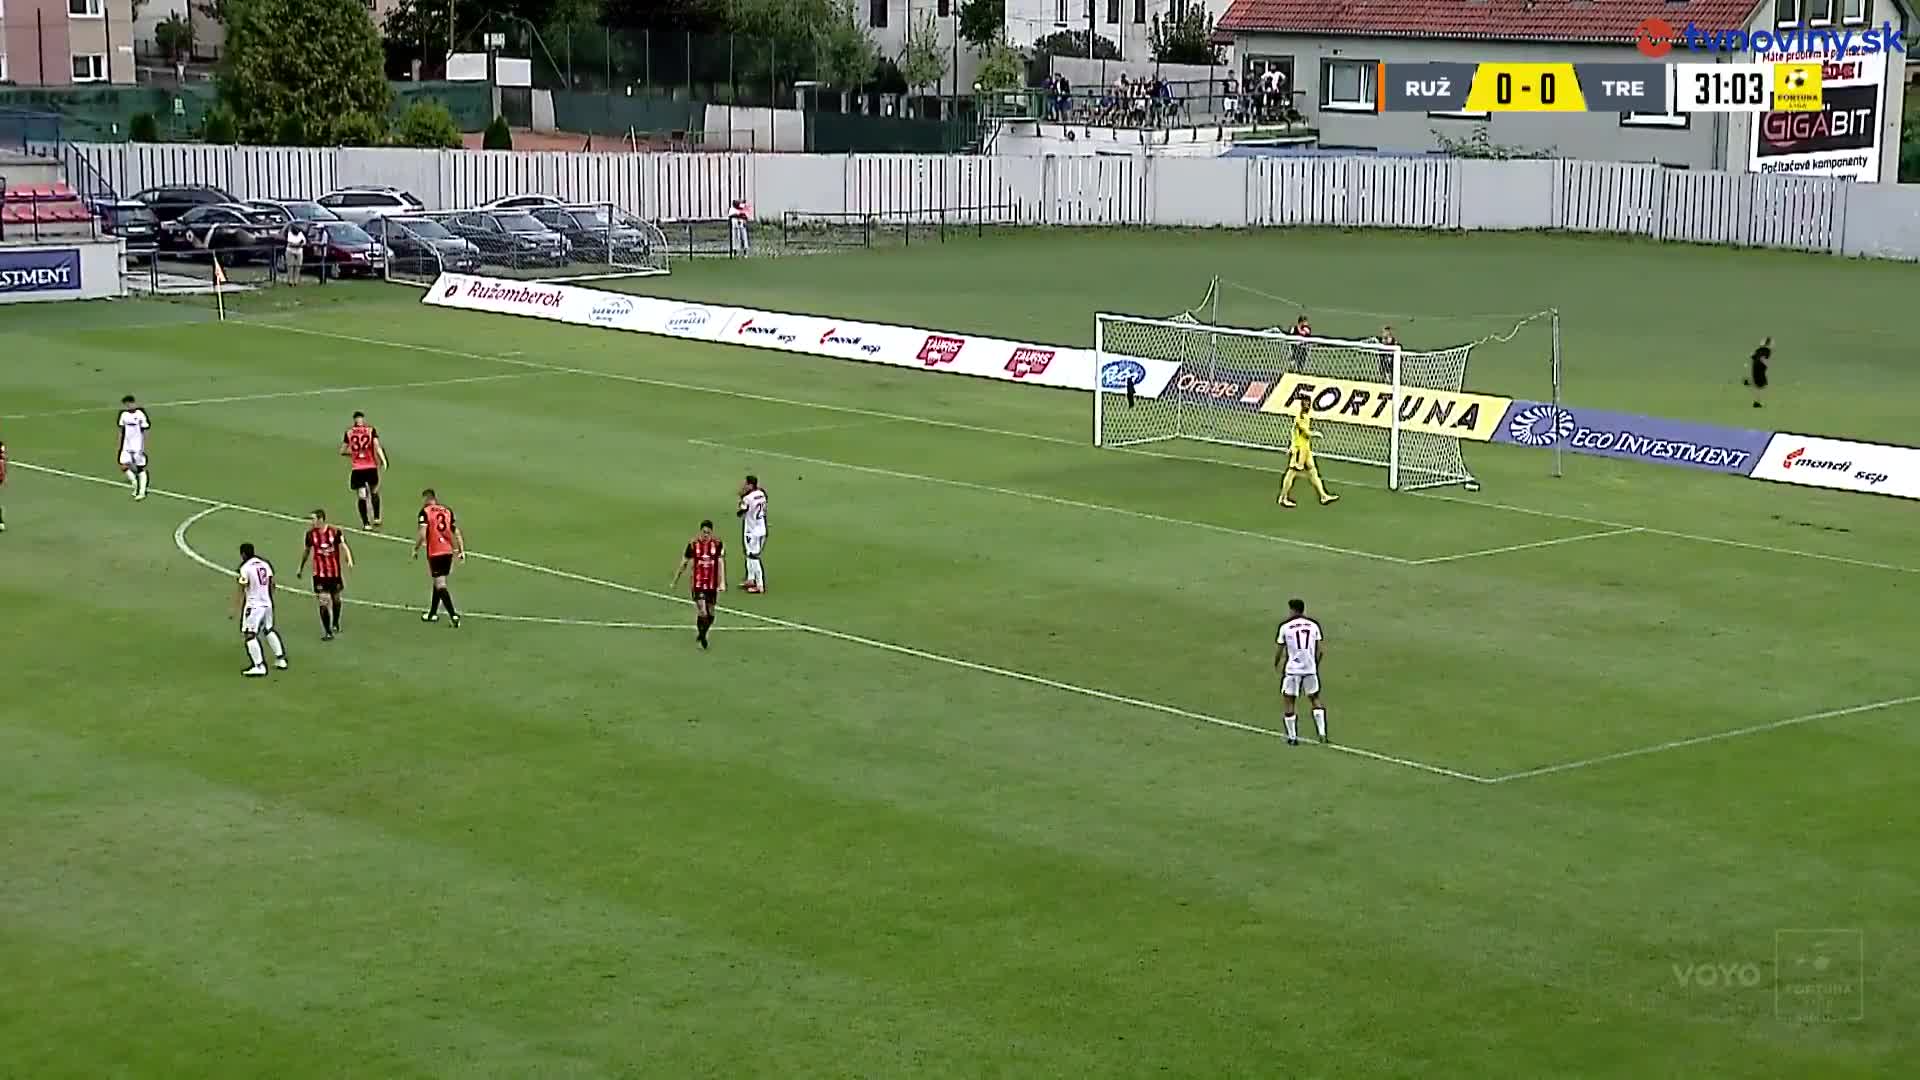 RUŽOMBEROK - TRENČÍN 0:0 (5. kolo Fortuna ligy)